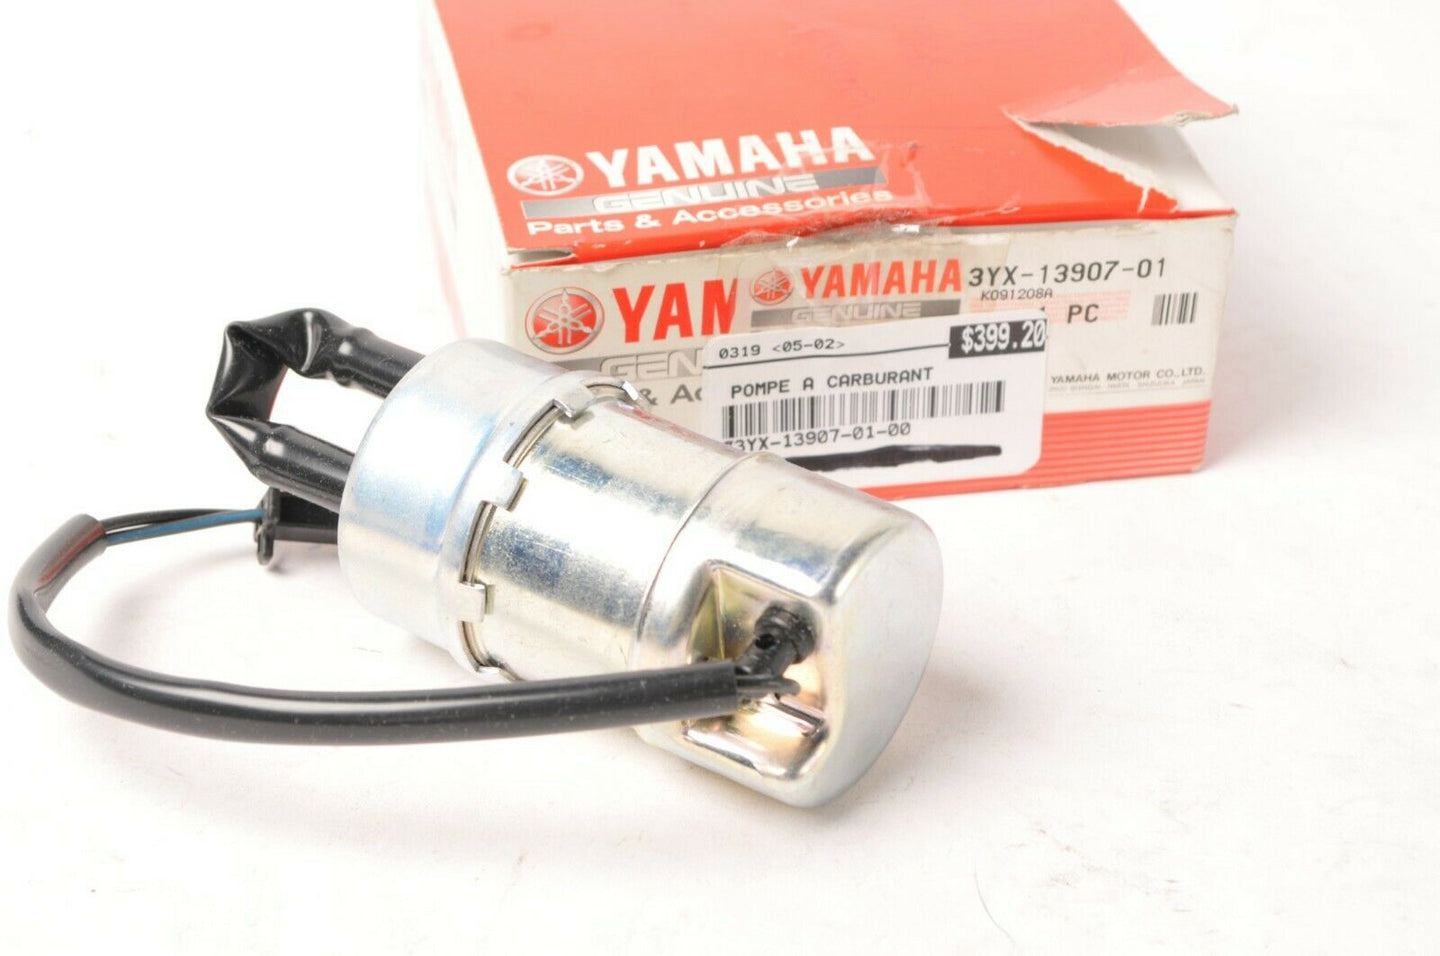 Genuine Yamaha 3YX-13907-01 Fuel Pump - V-Star 1100 650 Custom Classic 98-03